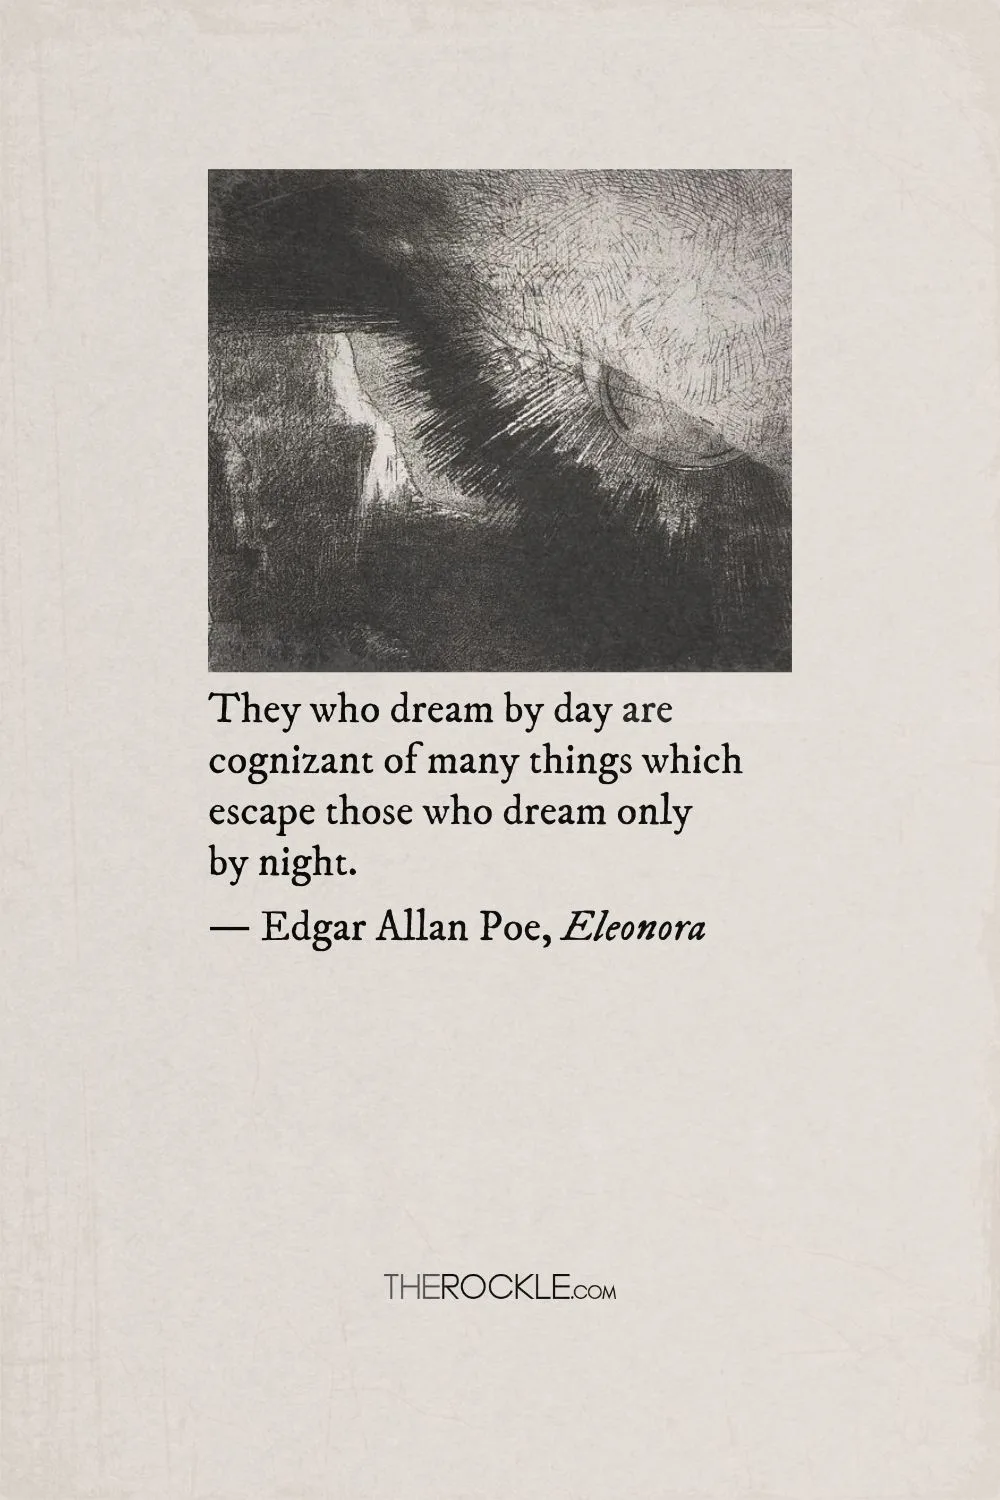 Edgar Allan Poe quote from Eleonora